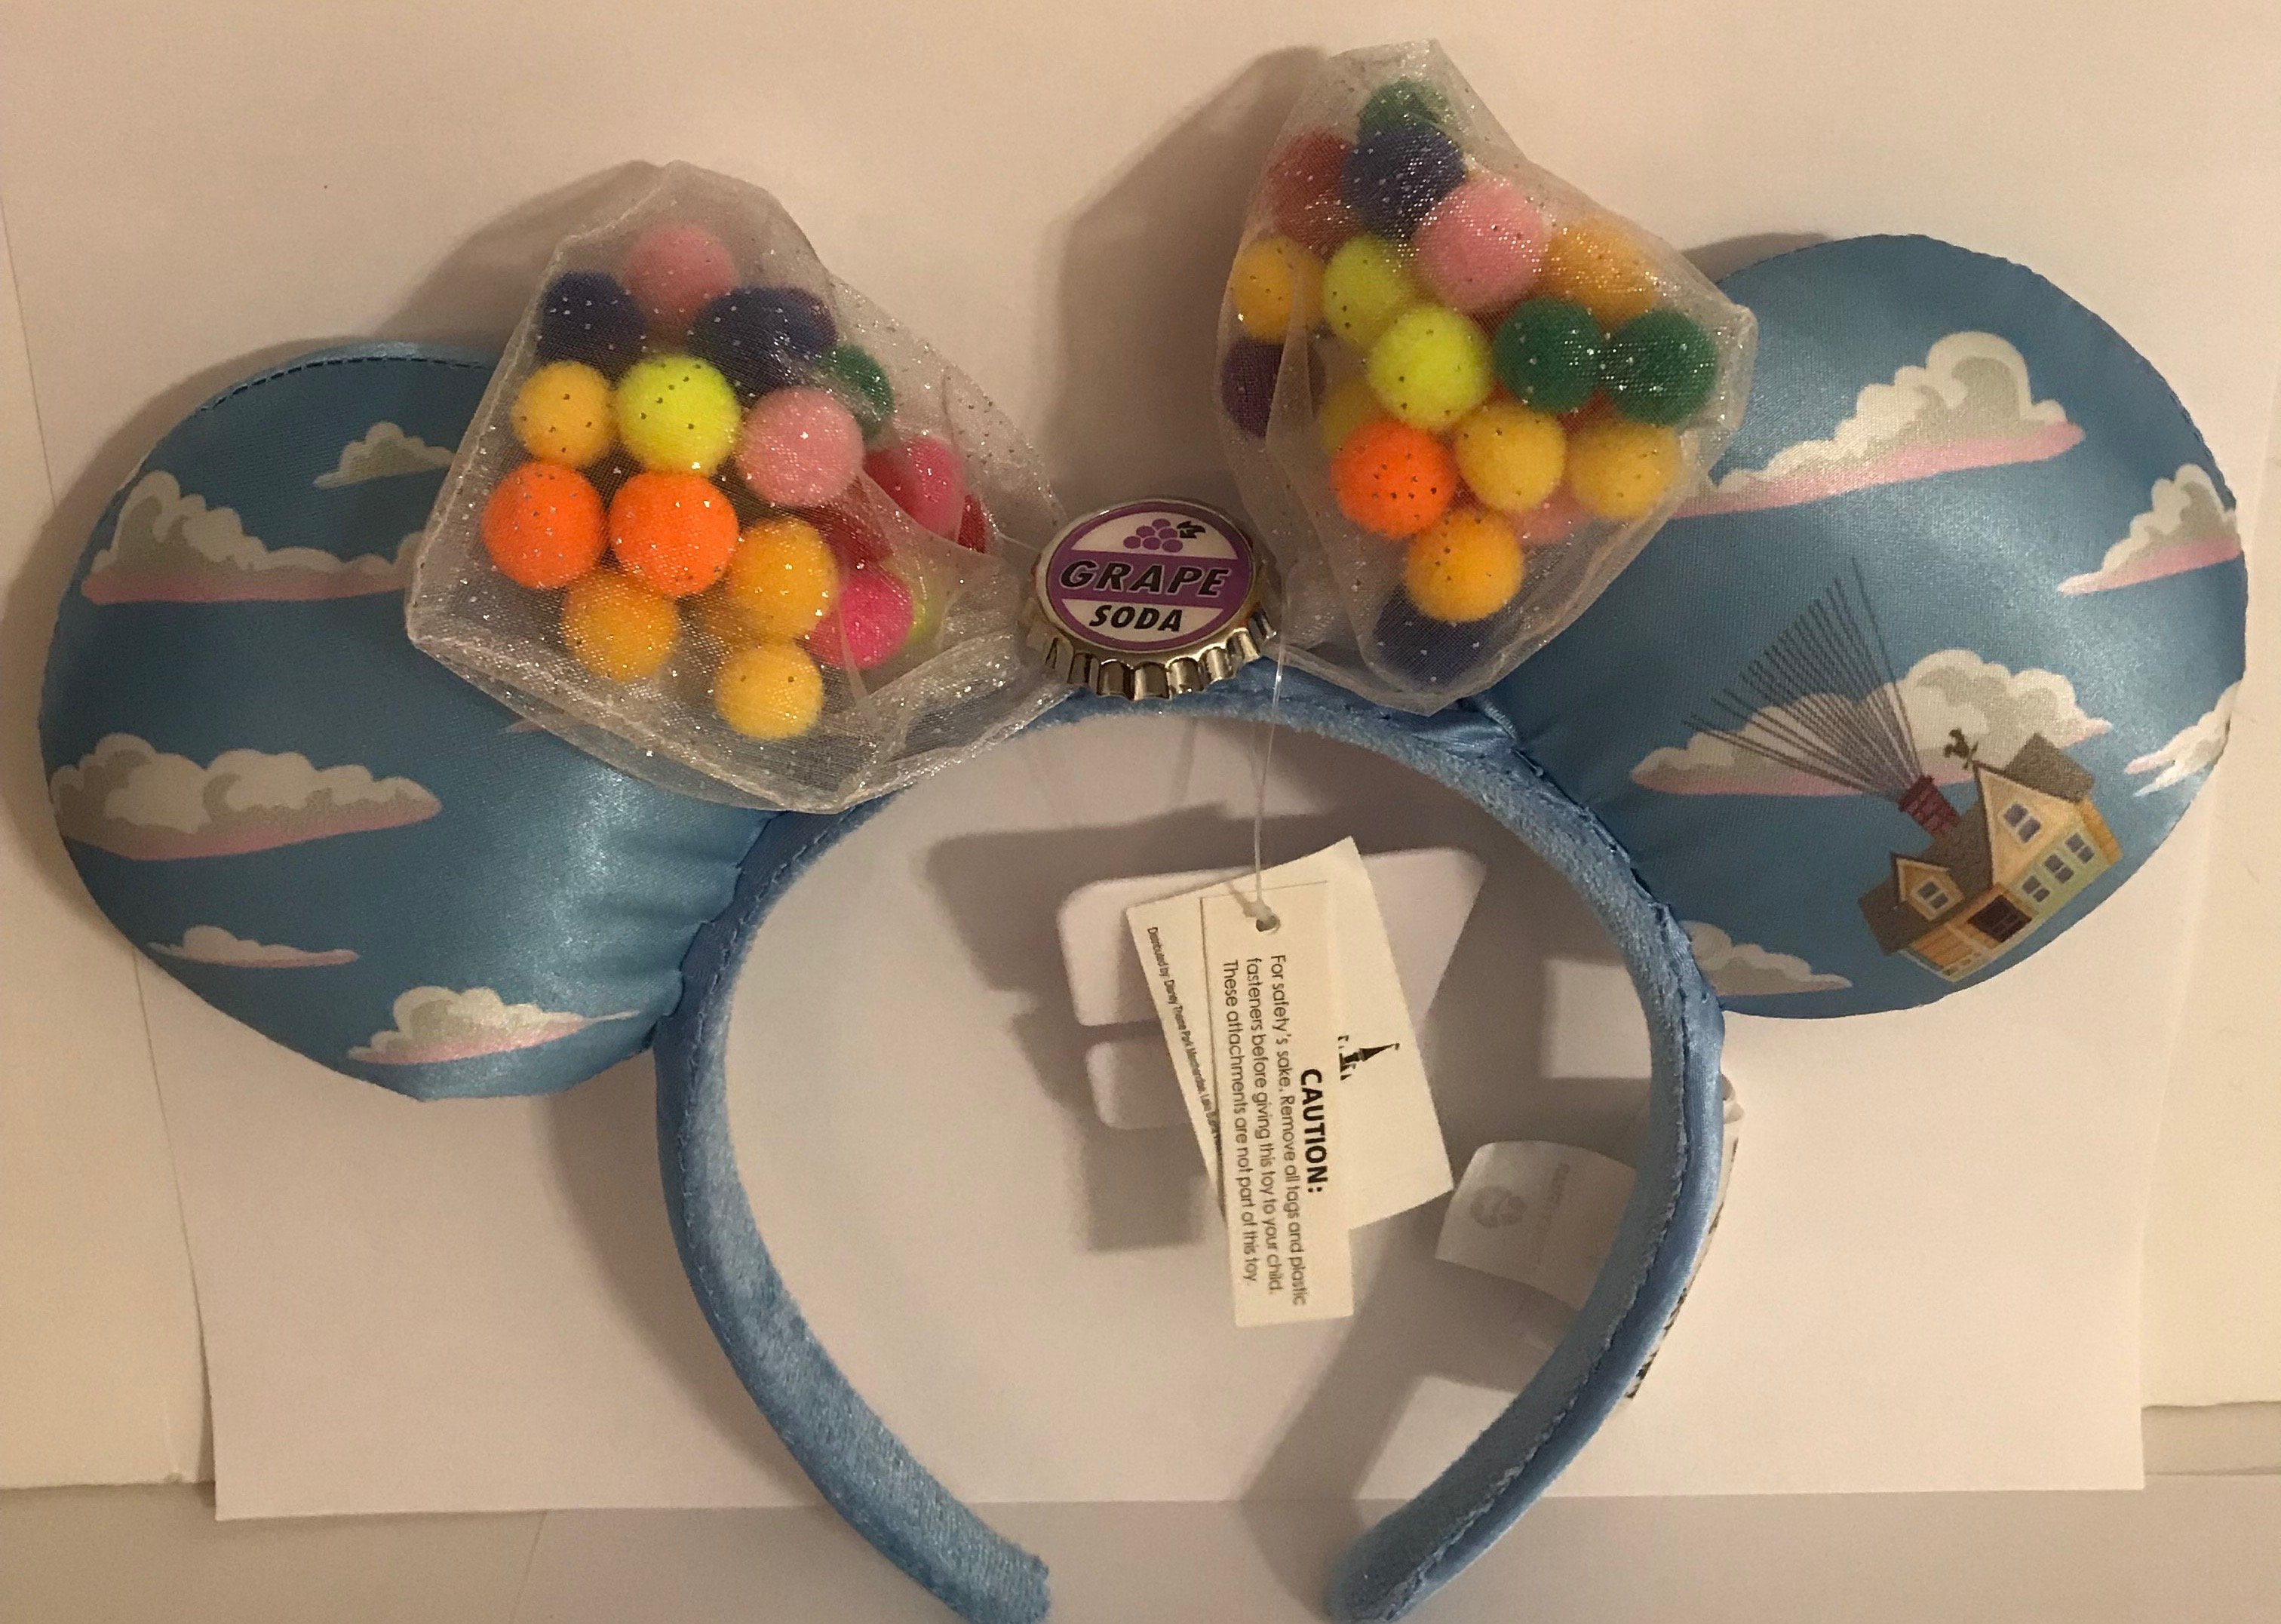 Details about   Disney Parks UP Grape Soda Cap Balloons 2020 Minnie Ears Rare Pixar Headband 